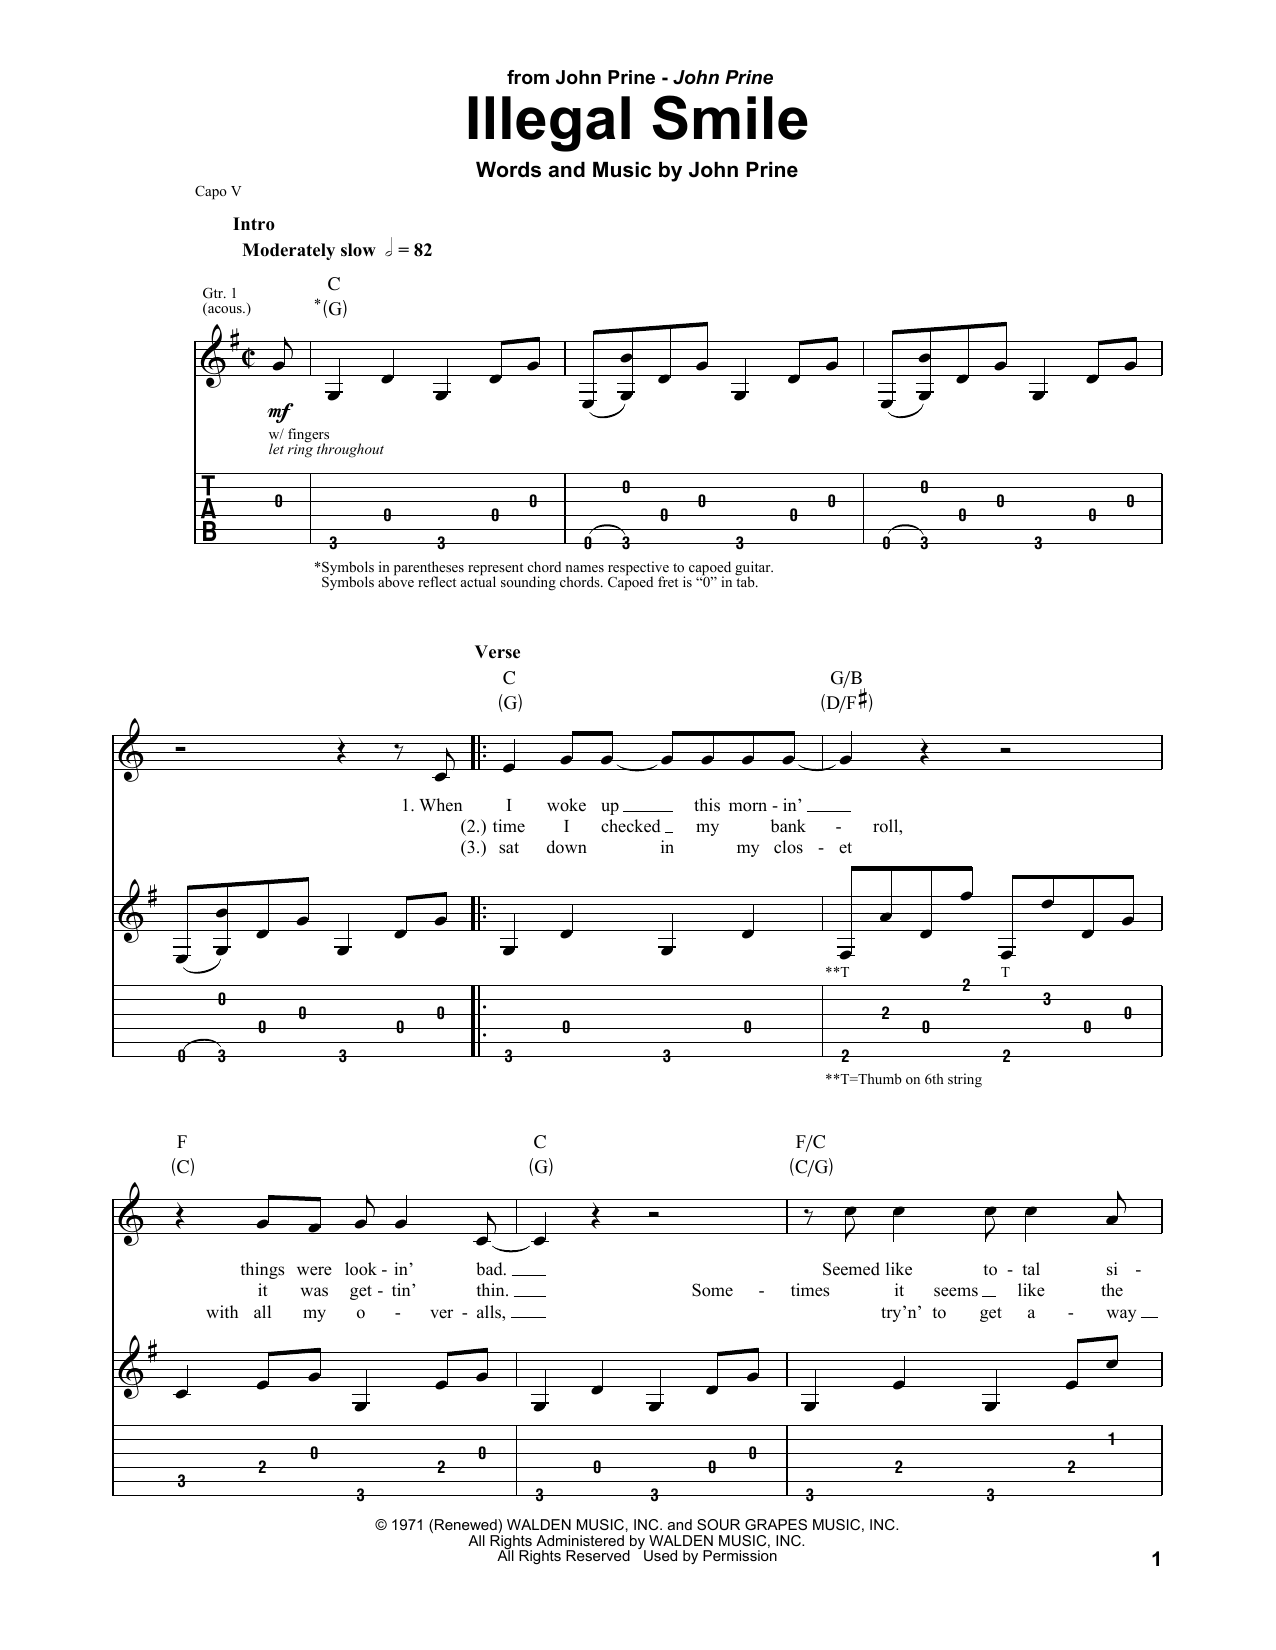 John Prine Illegal Smile Sheet Music Notes & Chords for Ukulele - Download or Print PDF